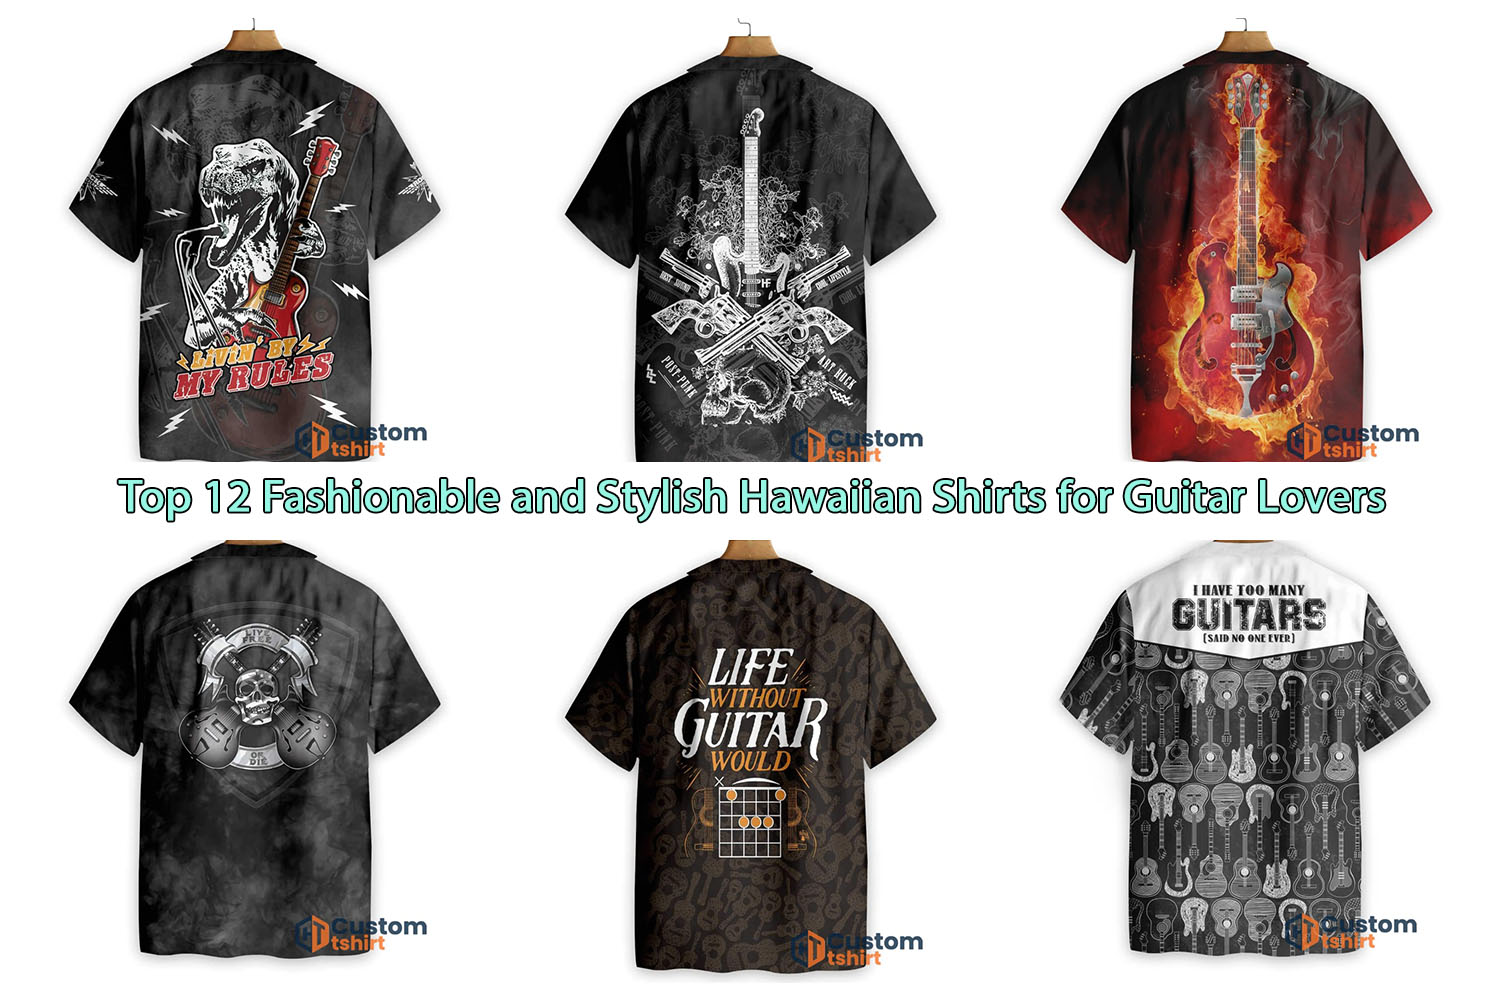 Top 12 Fashionable and Stylish Hawaiian Shirts for Guitar Lovers